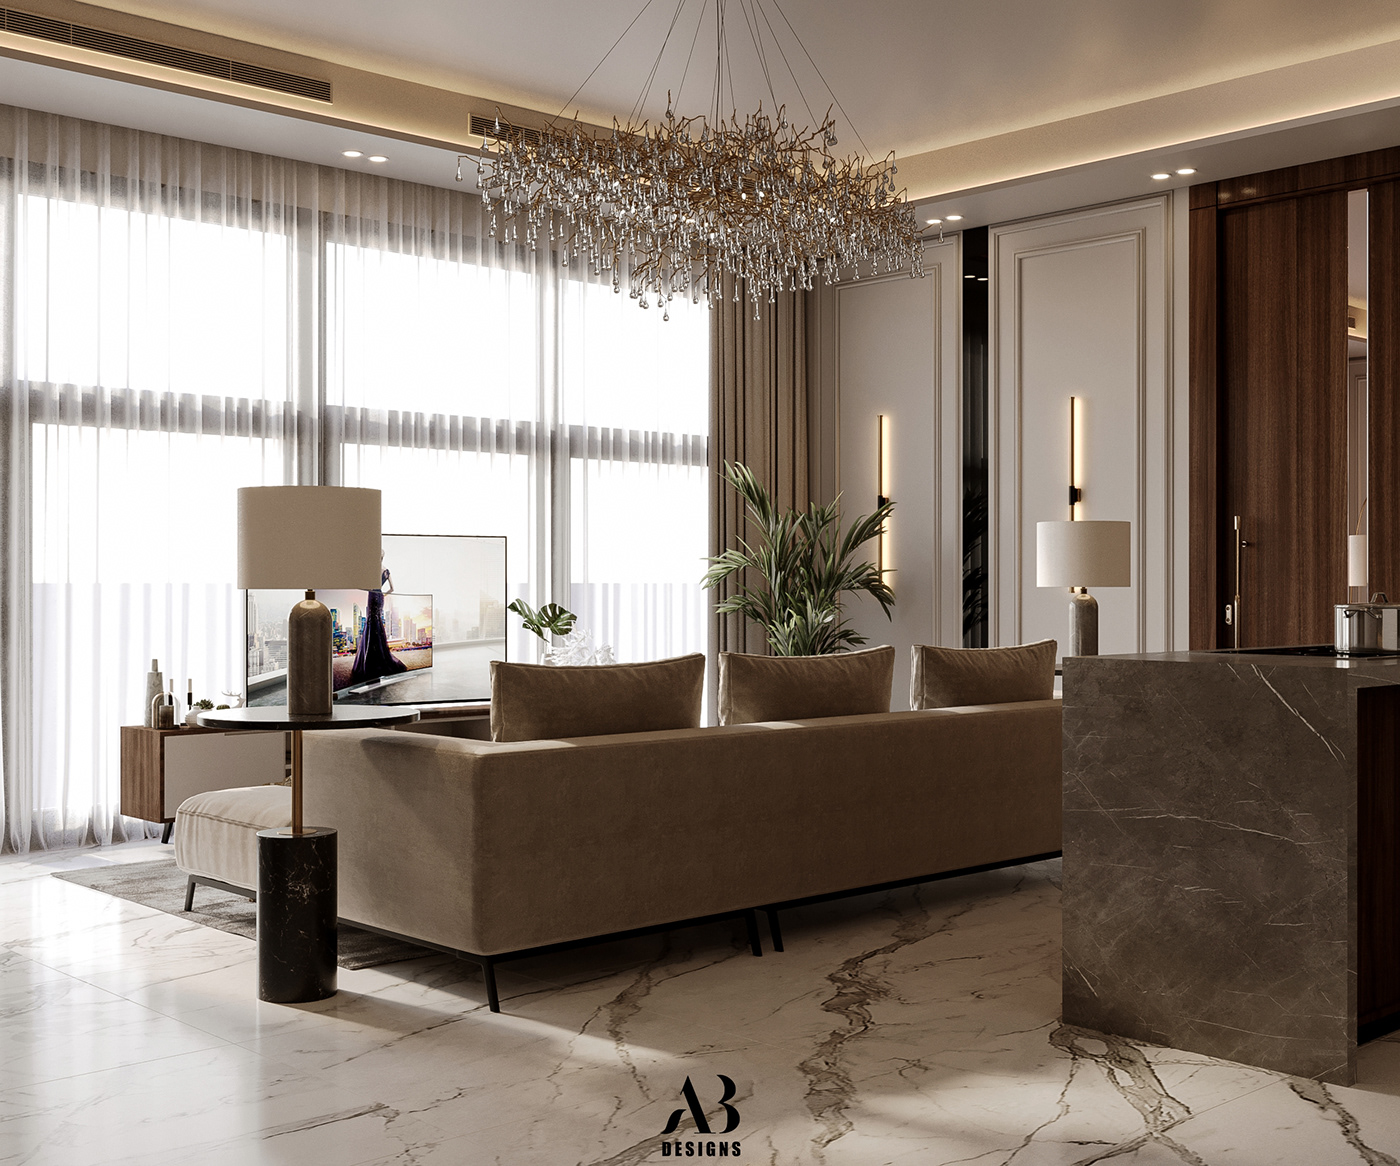 Interior living room neoclassic art visualization design